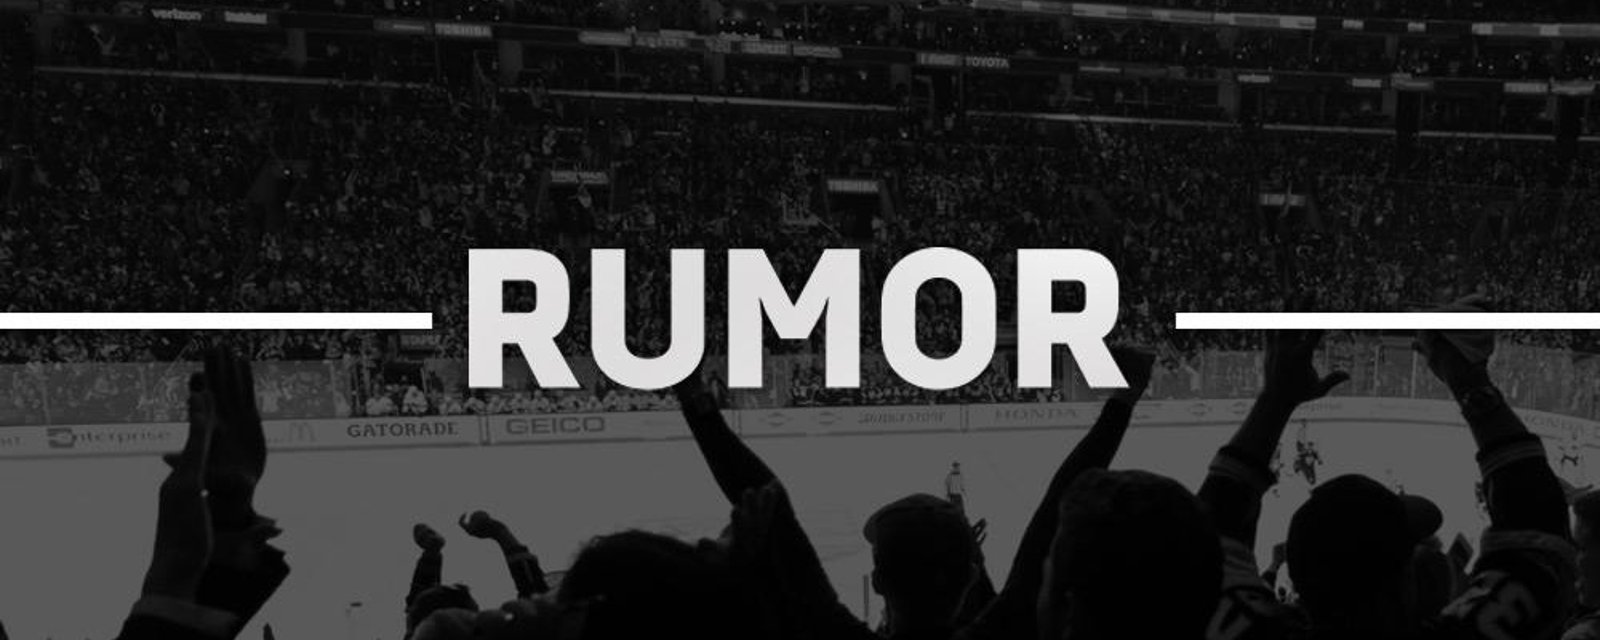 Rumors of a major shake up inside one NHL team.